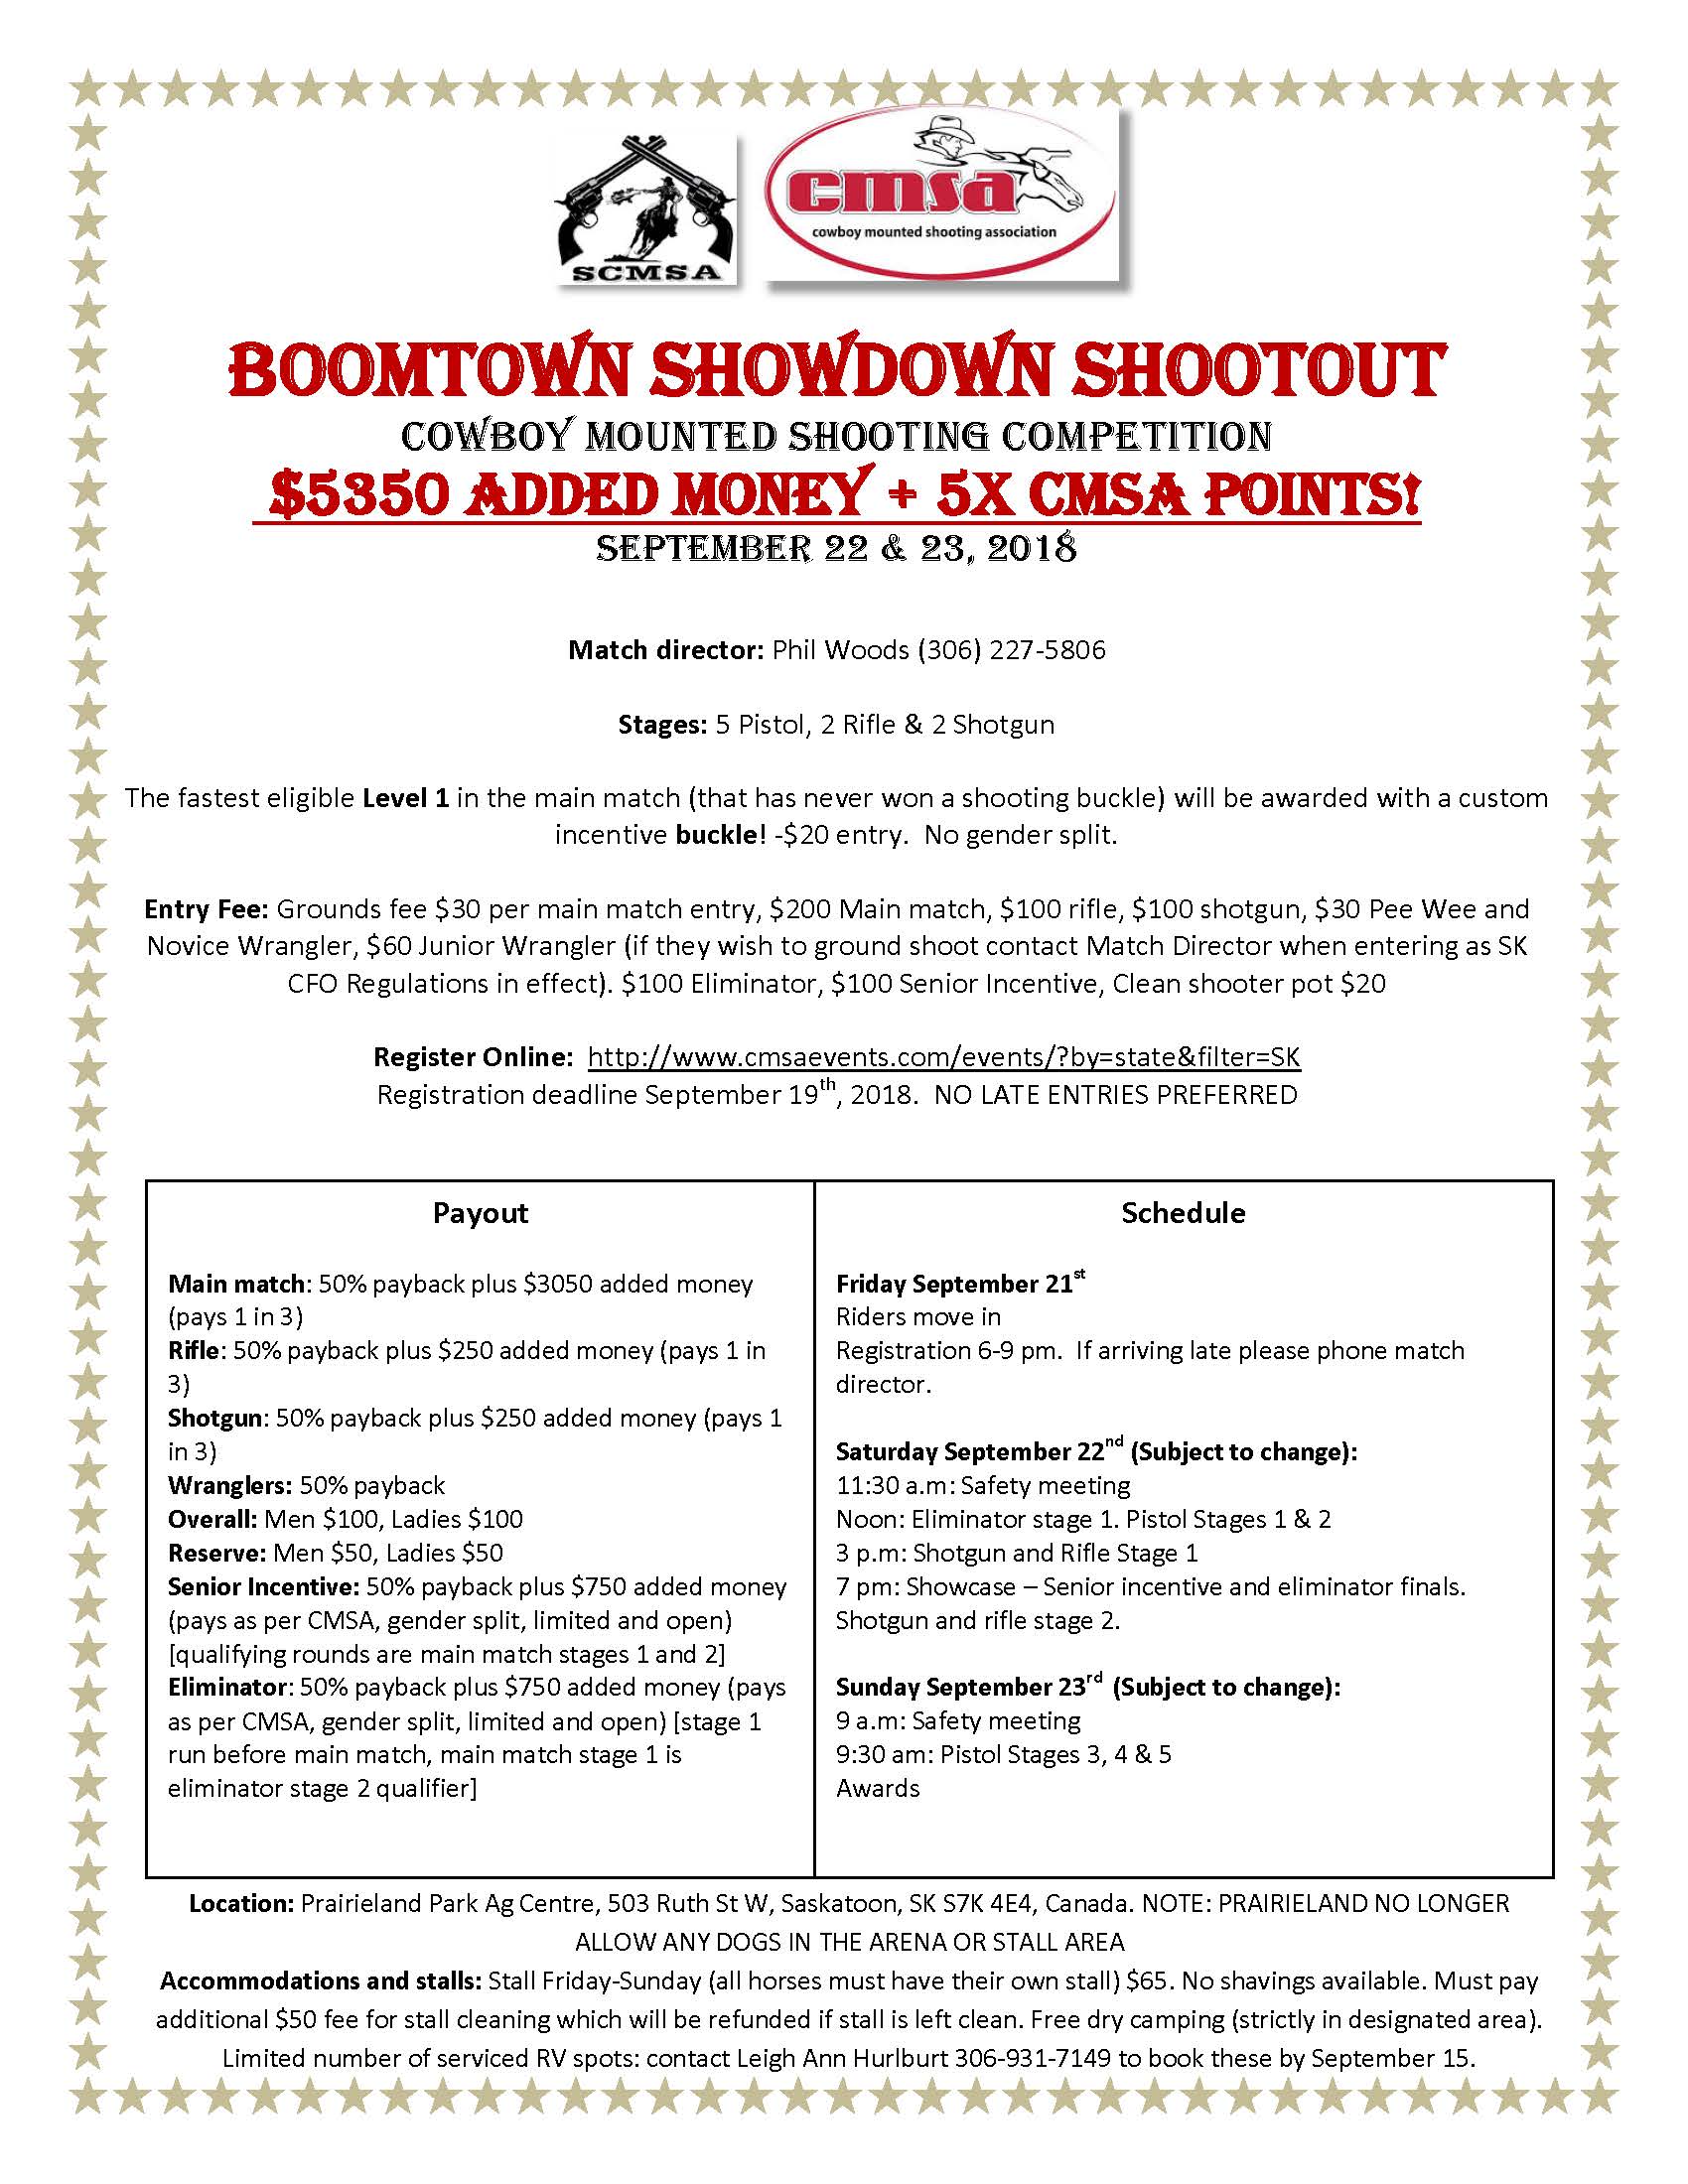 Boomtown Showdown Shootout